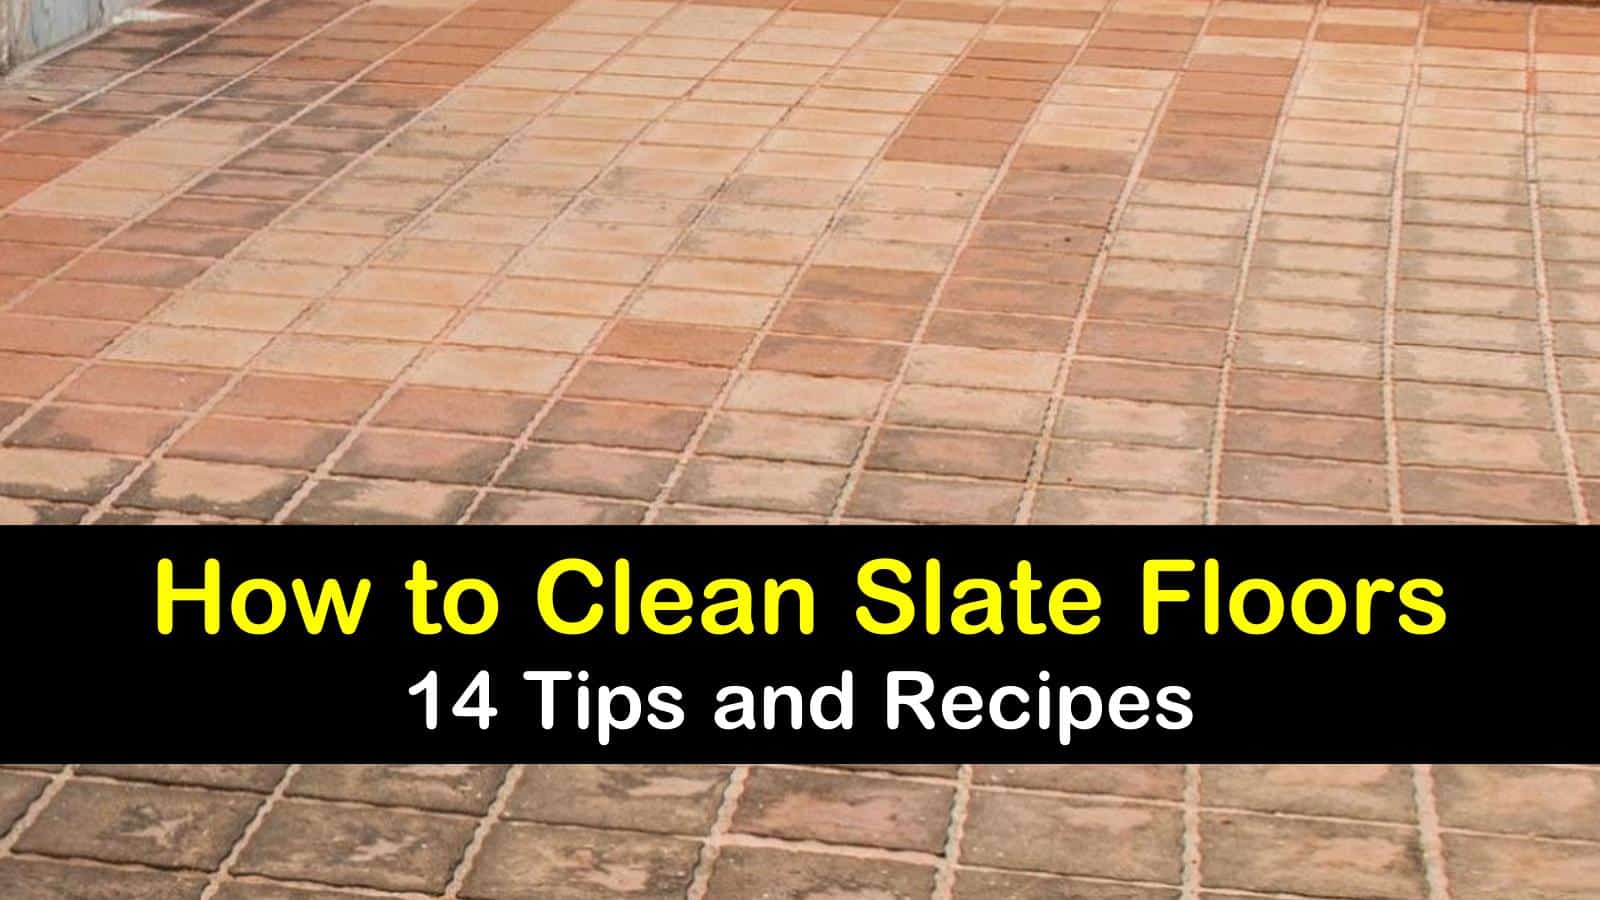 how to clean slate floors titleimg1